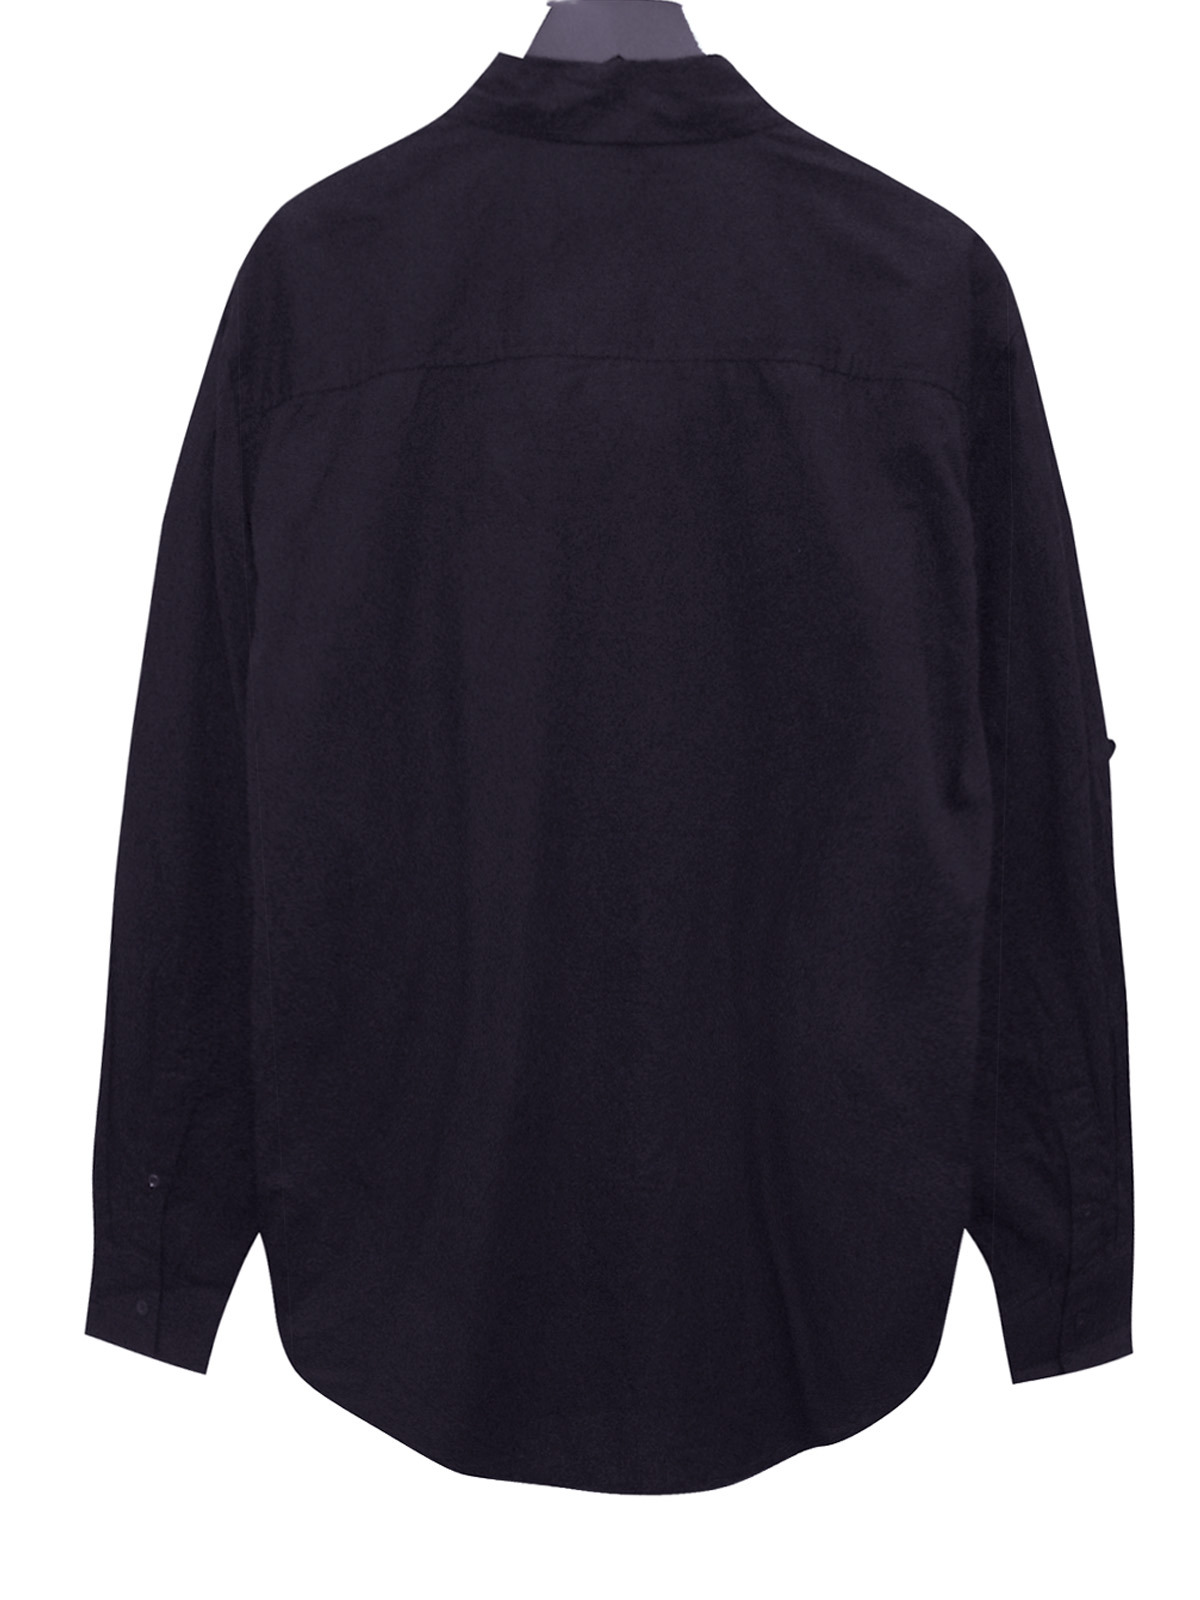 Jacamo - - Jacamo Mens BLACK Pure Cotton Military Shirt - Size XL to 5XL